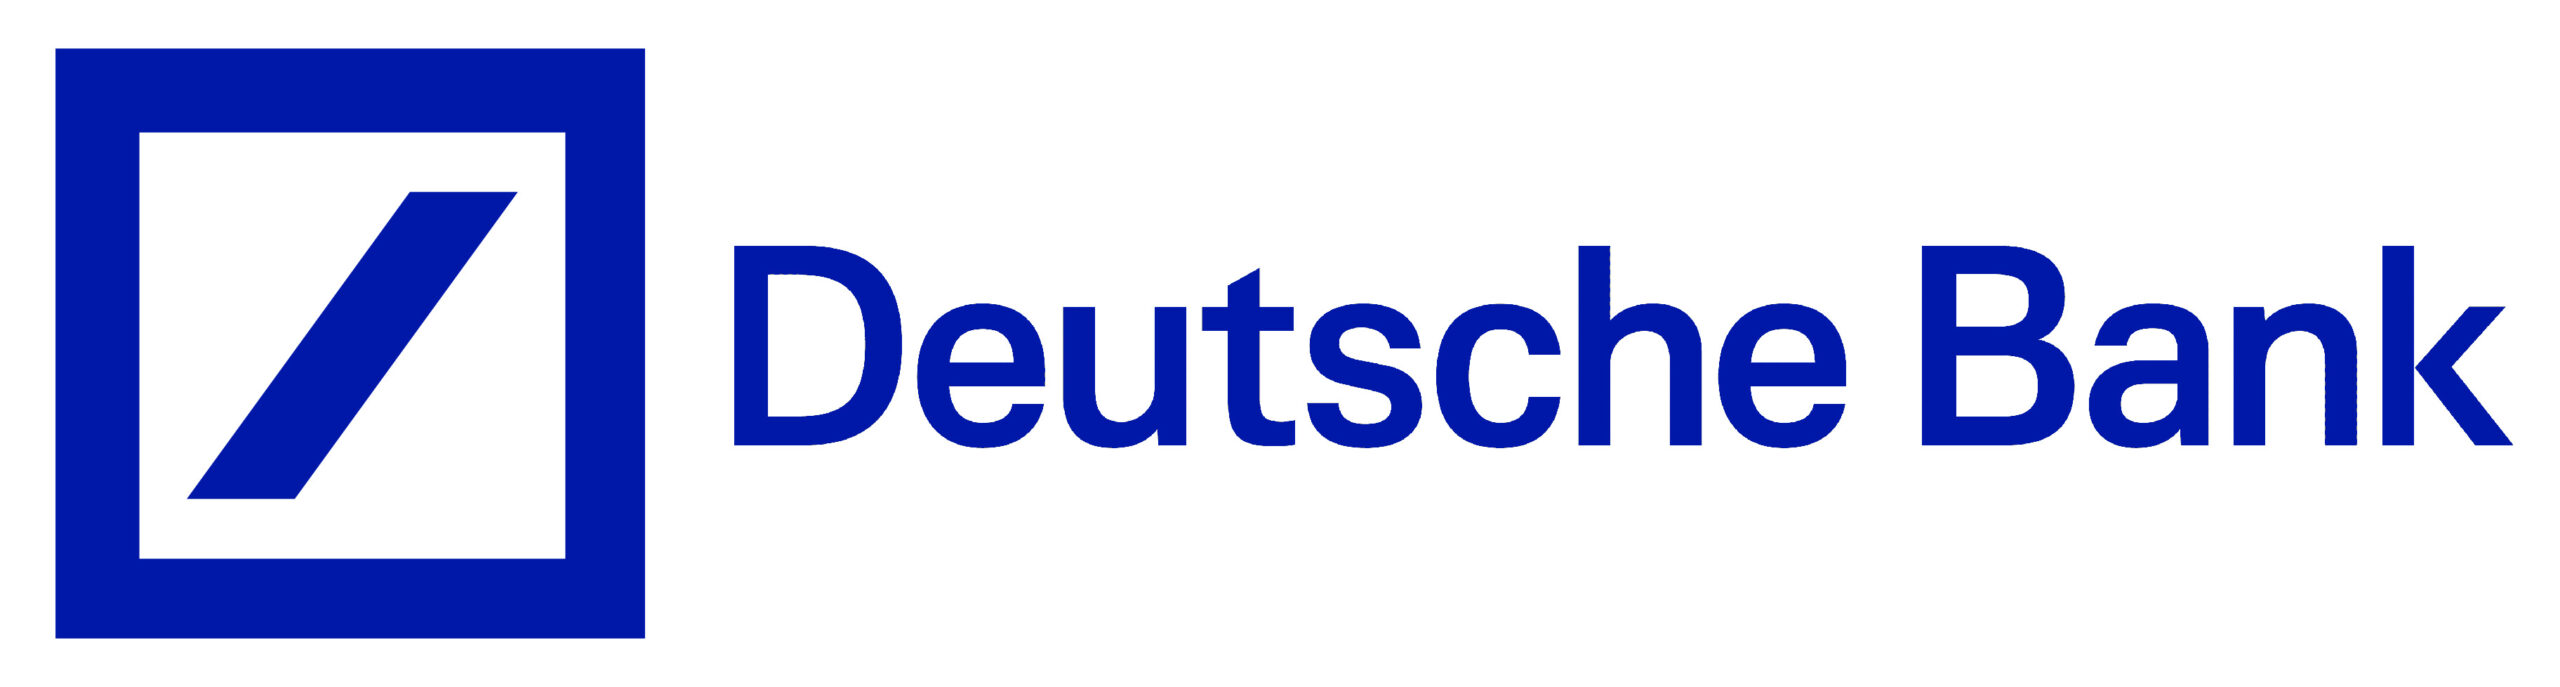 Deutsche Bank enters Buy Now Pay Later market